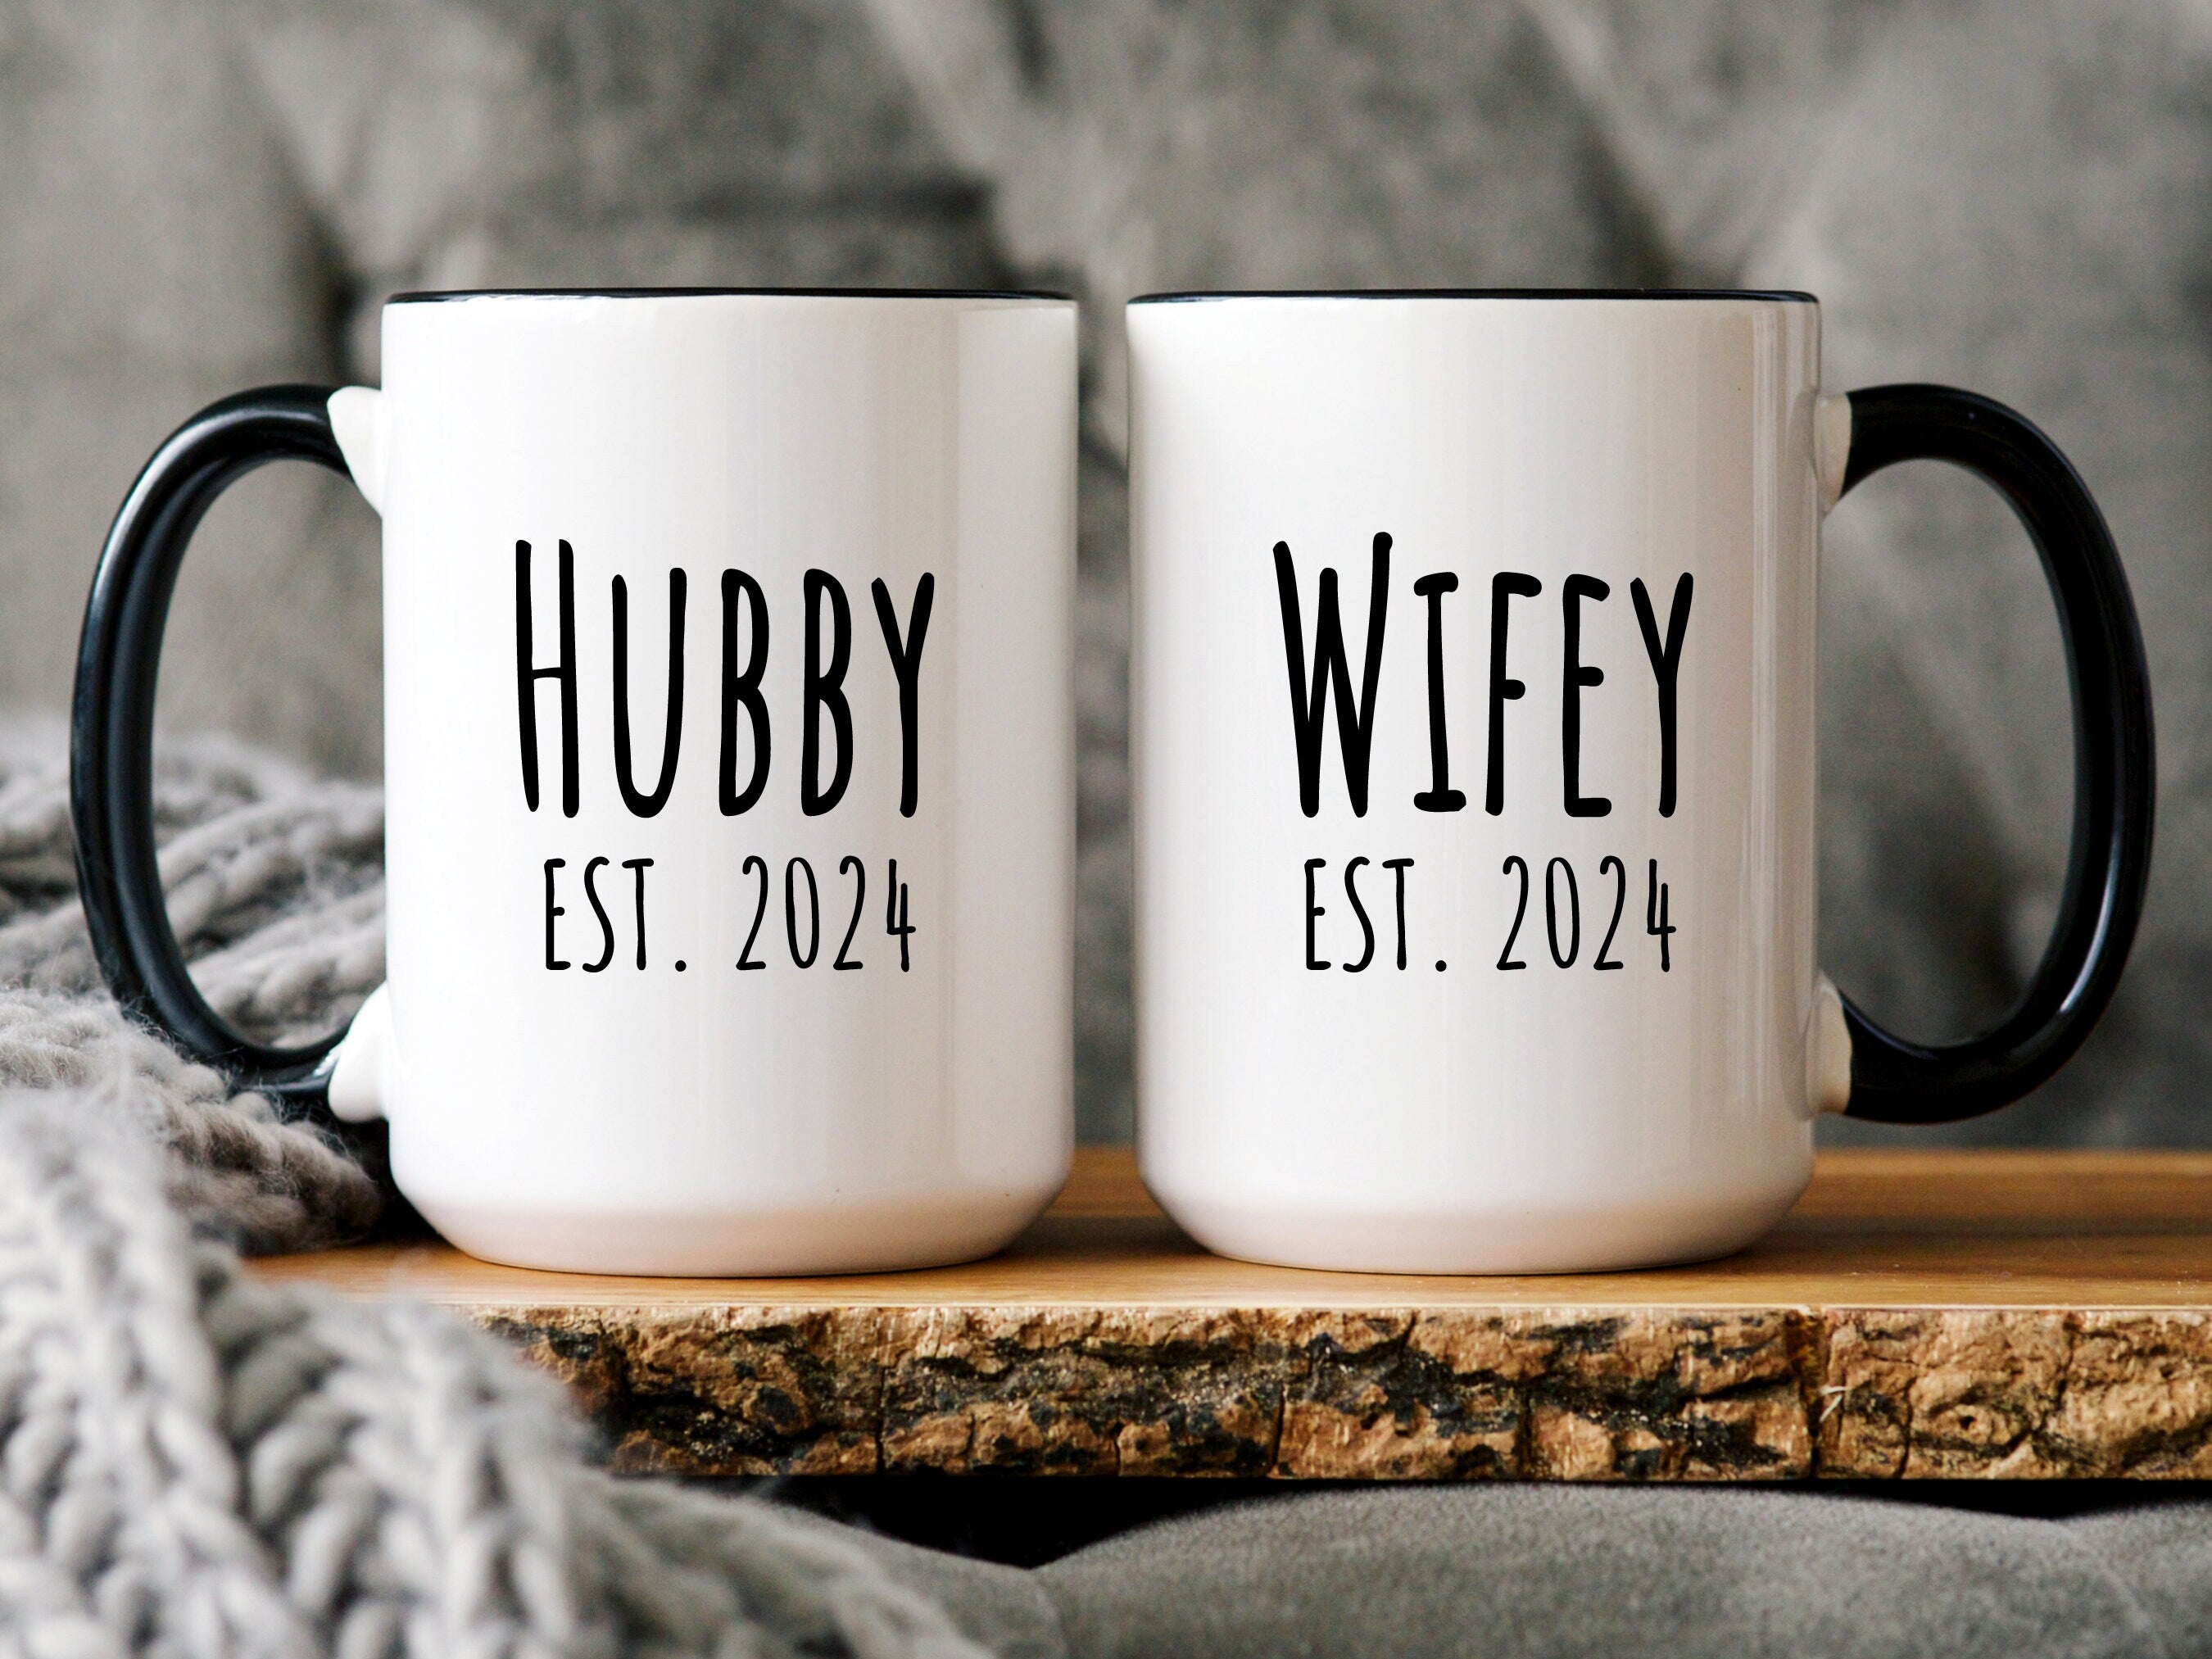 Hubby and Wifey Mug Set - 0